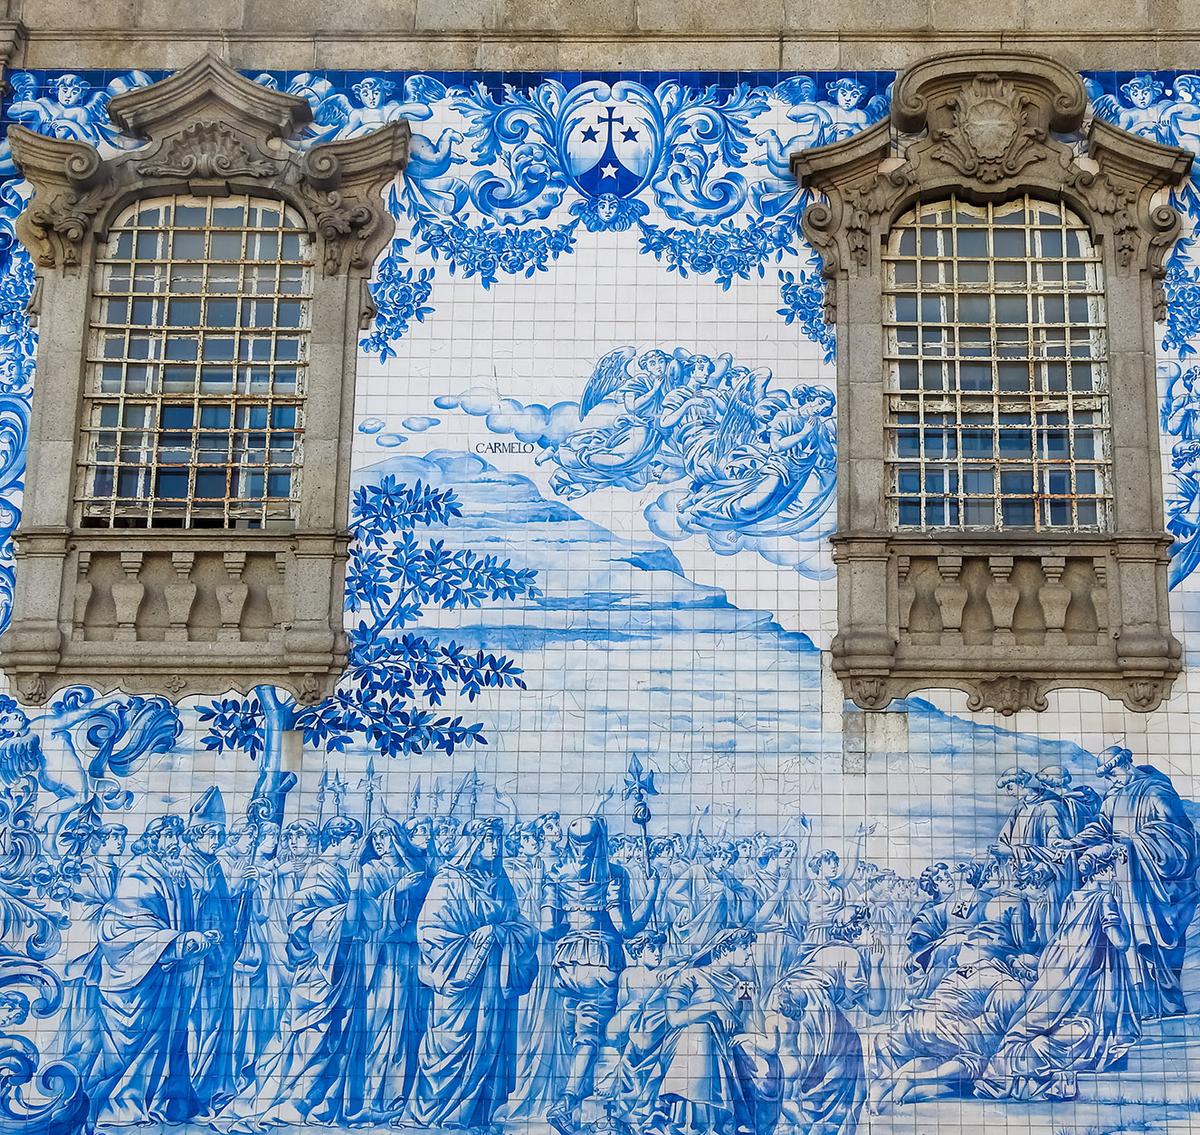 Detail of azulejos tile art depicting biblical scenes on the side of Chapel of Souls. (Cassia Bars Hering/Shutterstock)